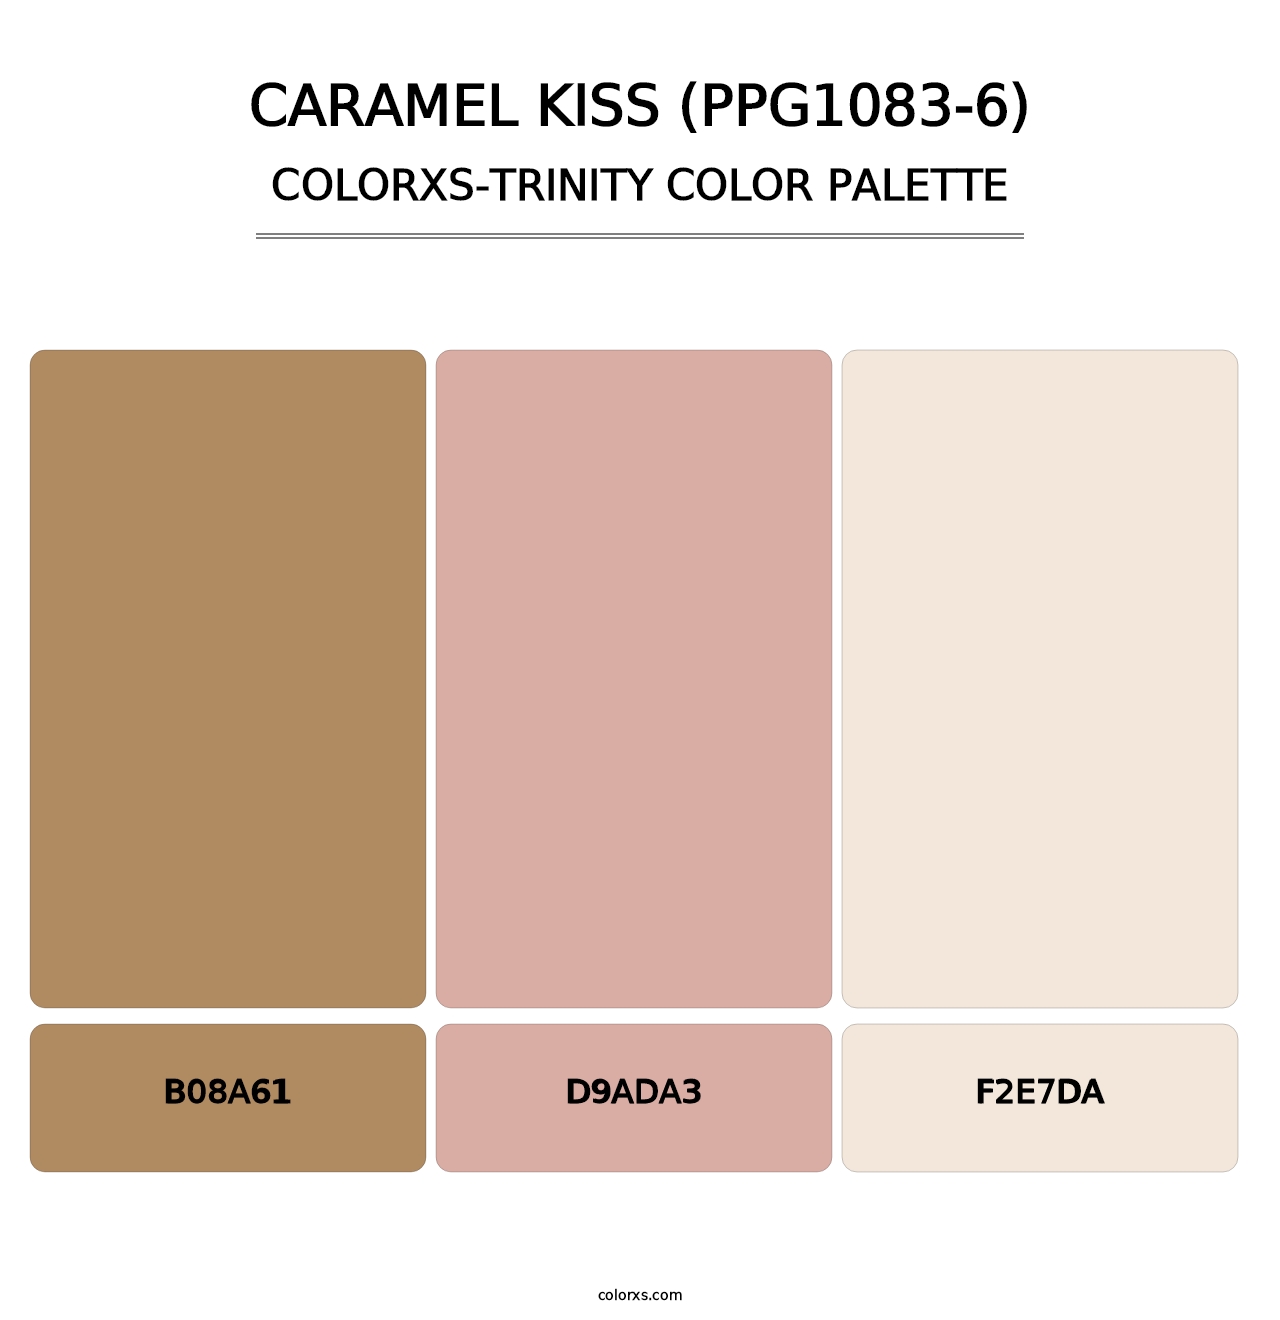 Caramel Kiss (PPG1083-6) - Colorxs Trinity Palette